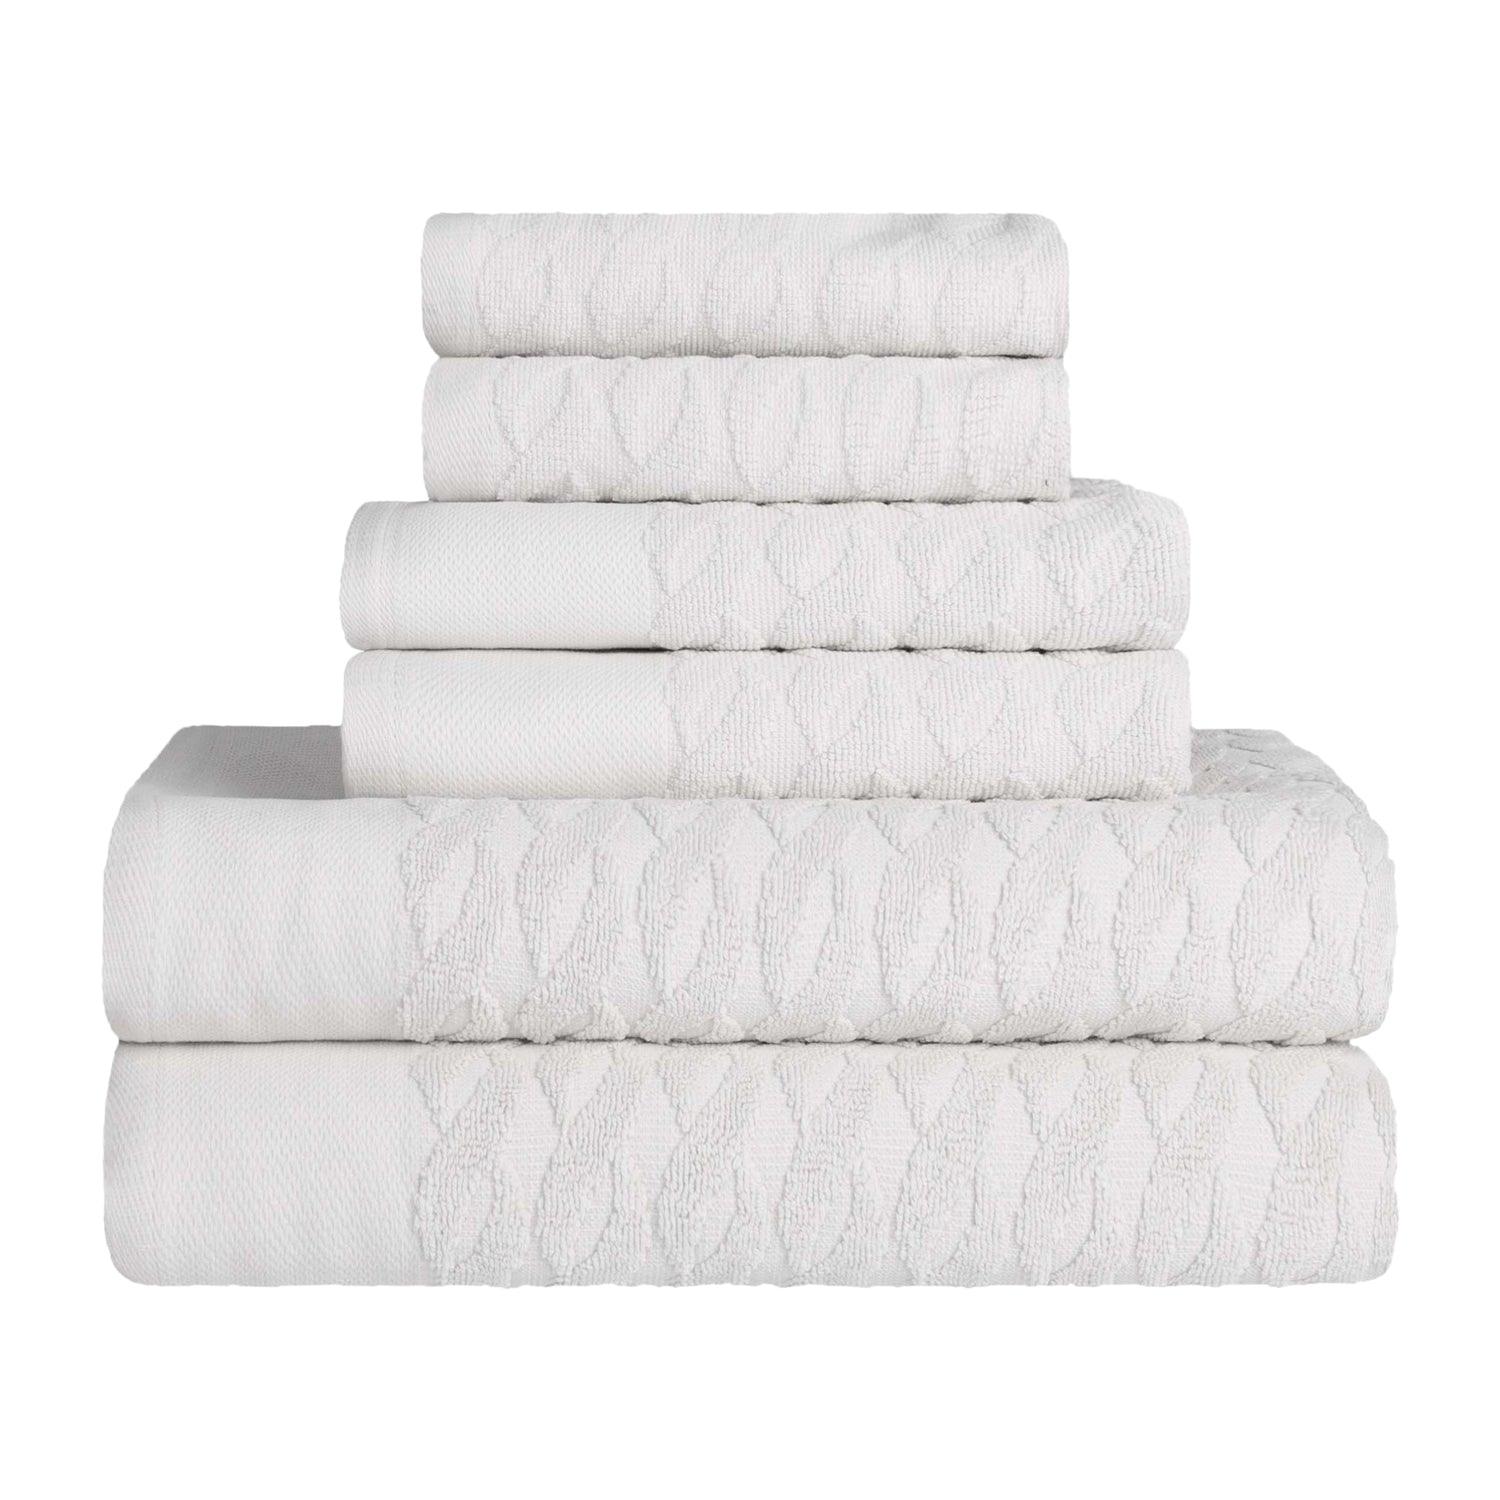 Premium Turkish Cotton Herringbone Jacquard Assorted 6-Piece Towel Set - White